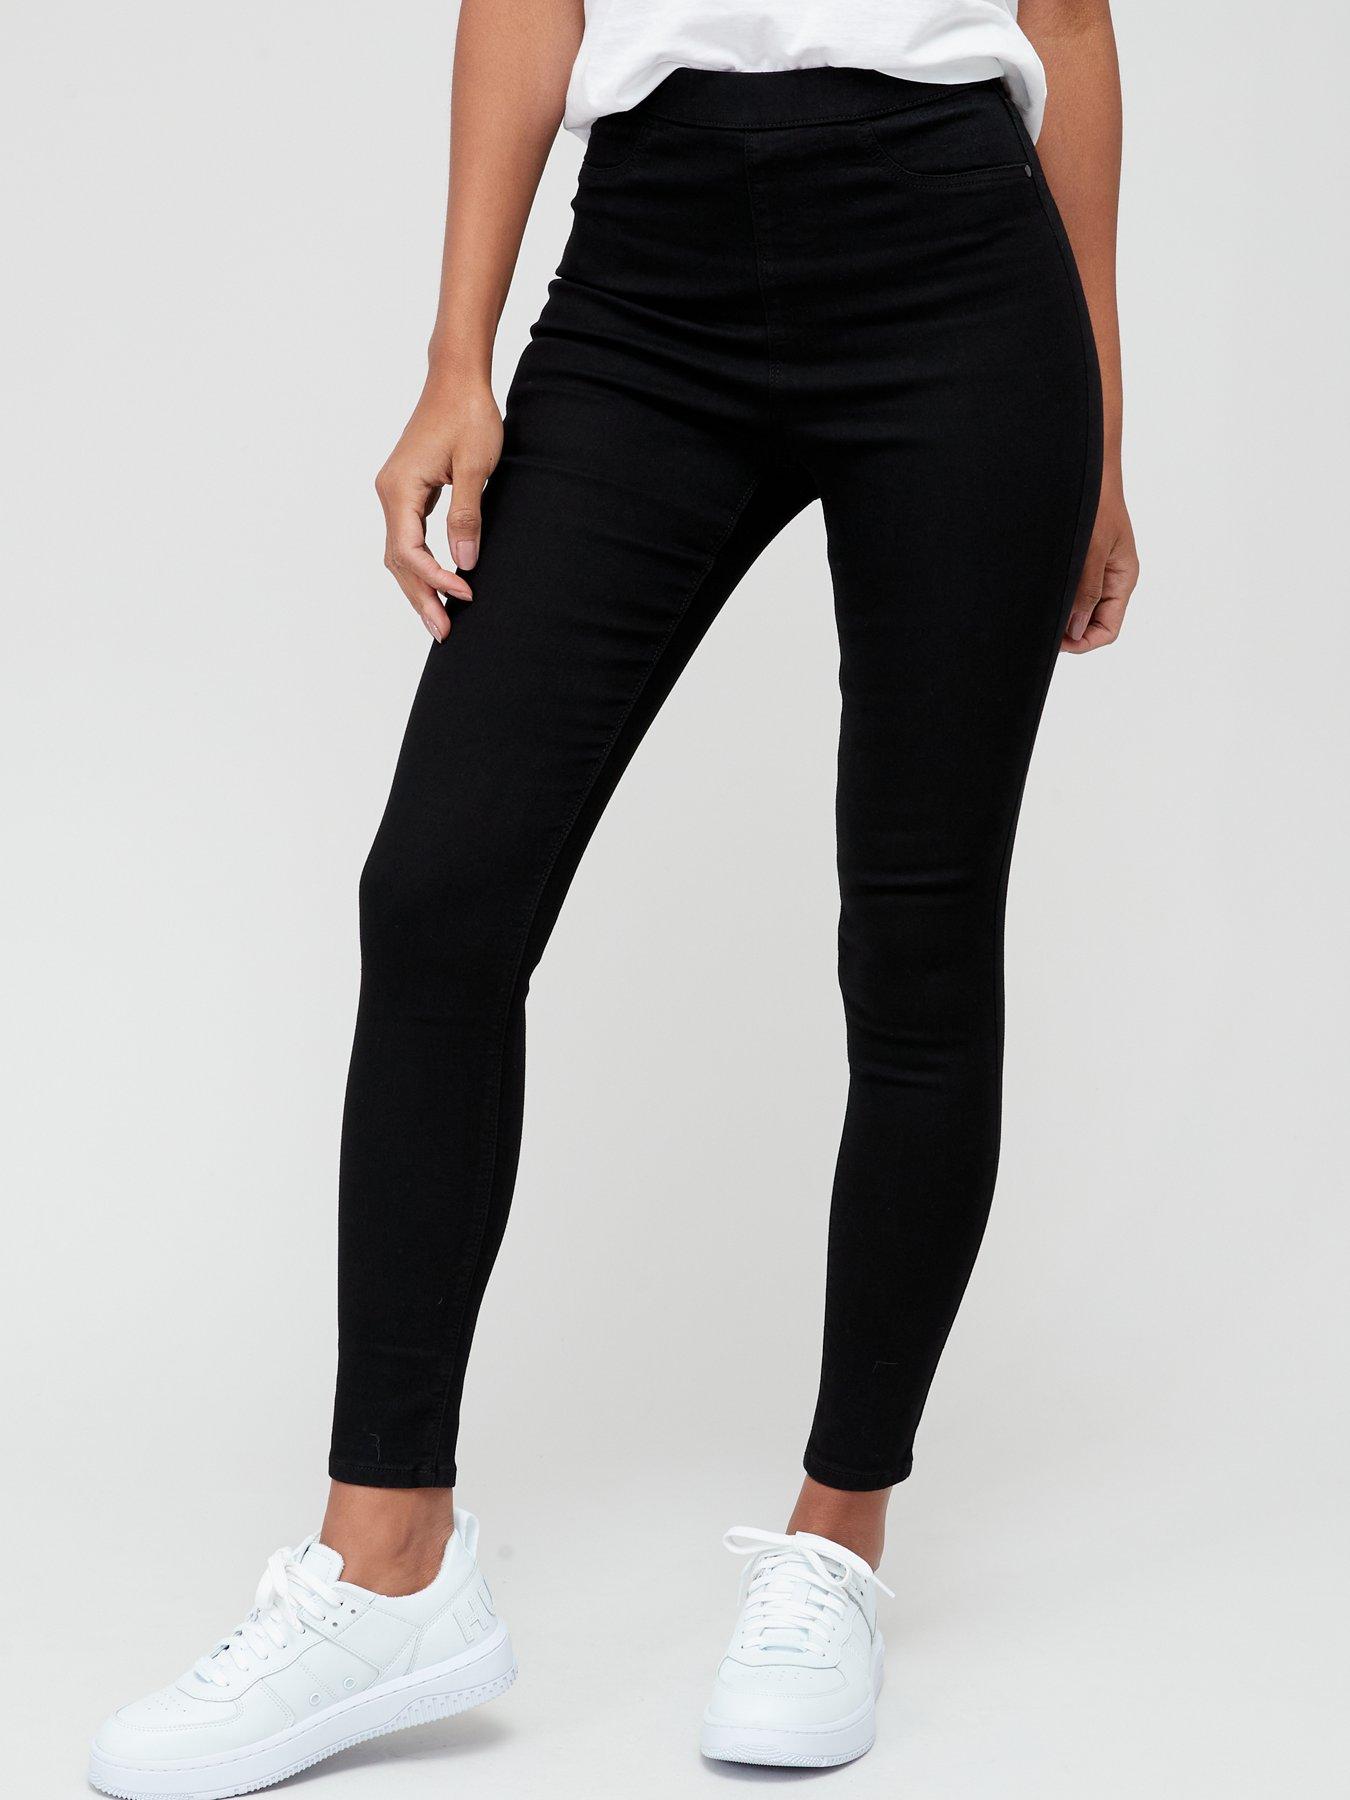 Black Women's Jeans, All Styles & Sizes